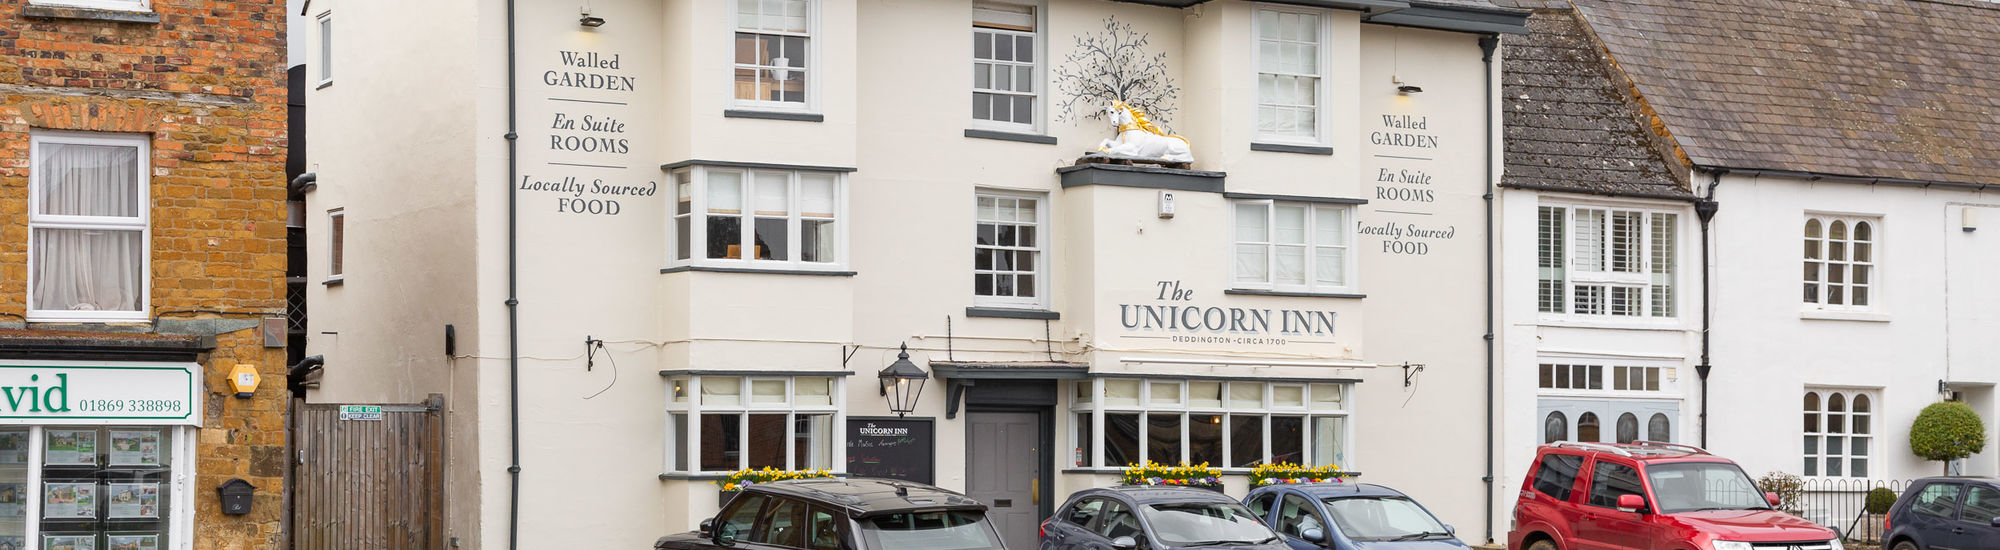 The Unicorn Inn - Deddington